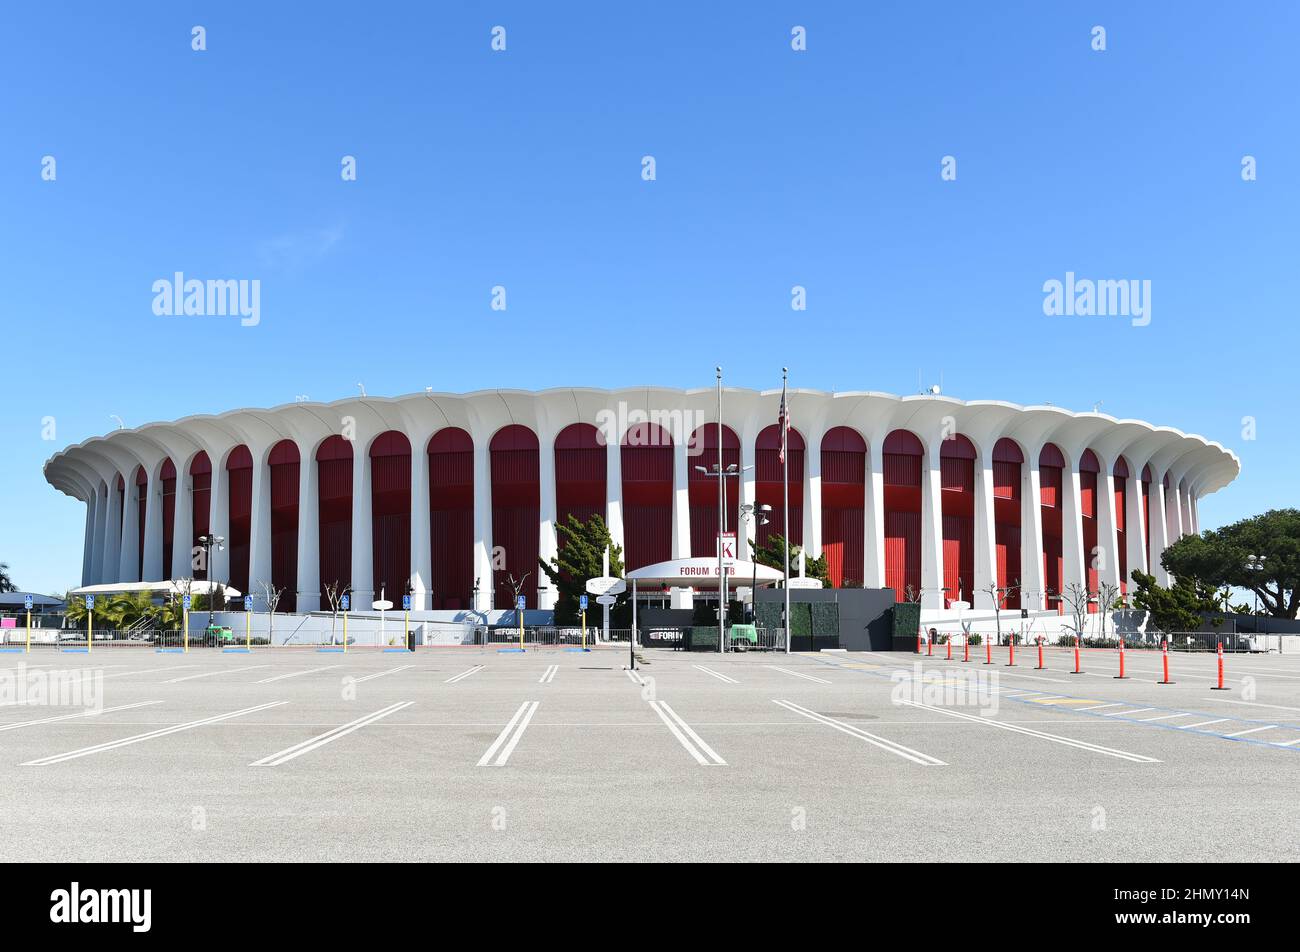 INGLEWOOD, CALIFORNIA - 12 FEB 2022: The Forum, un luogo polifunzionale adiacente al SoFi Stadium e all'Hollywood Park Casino. Foto Stock